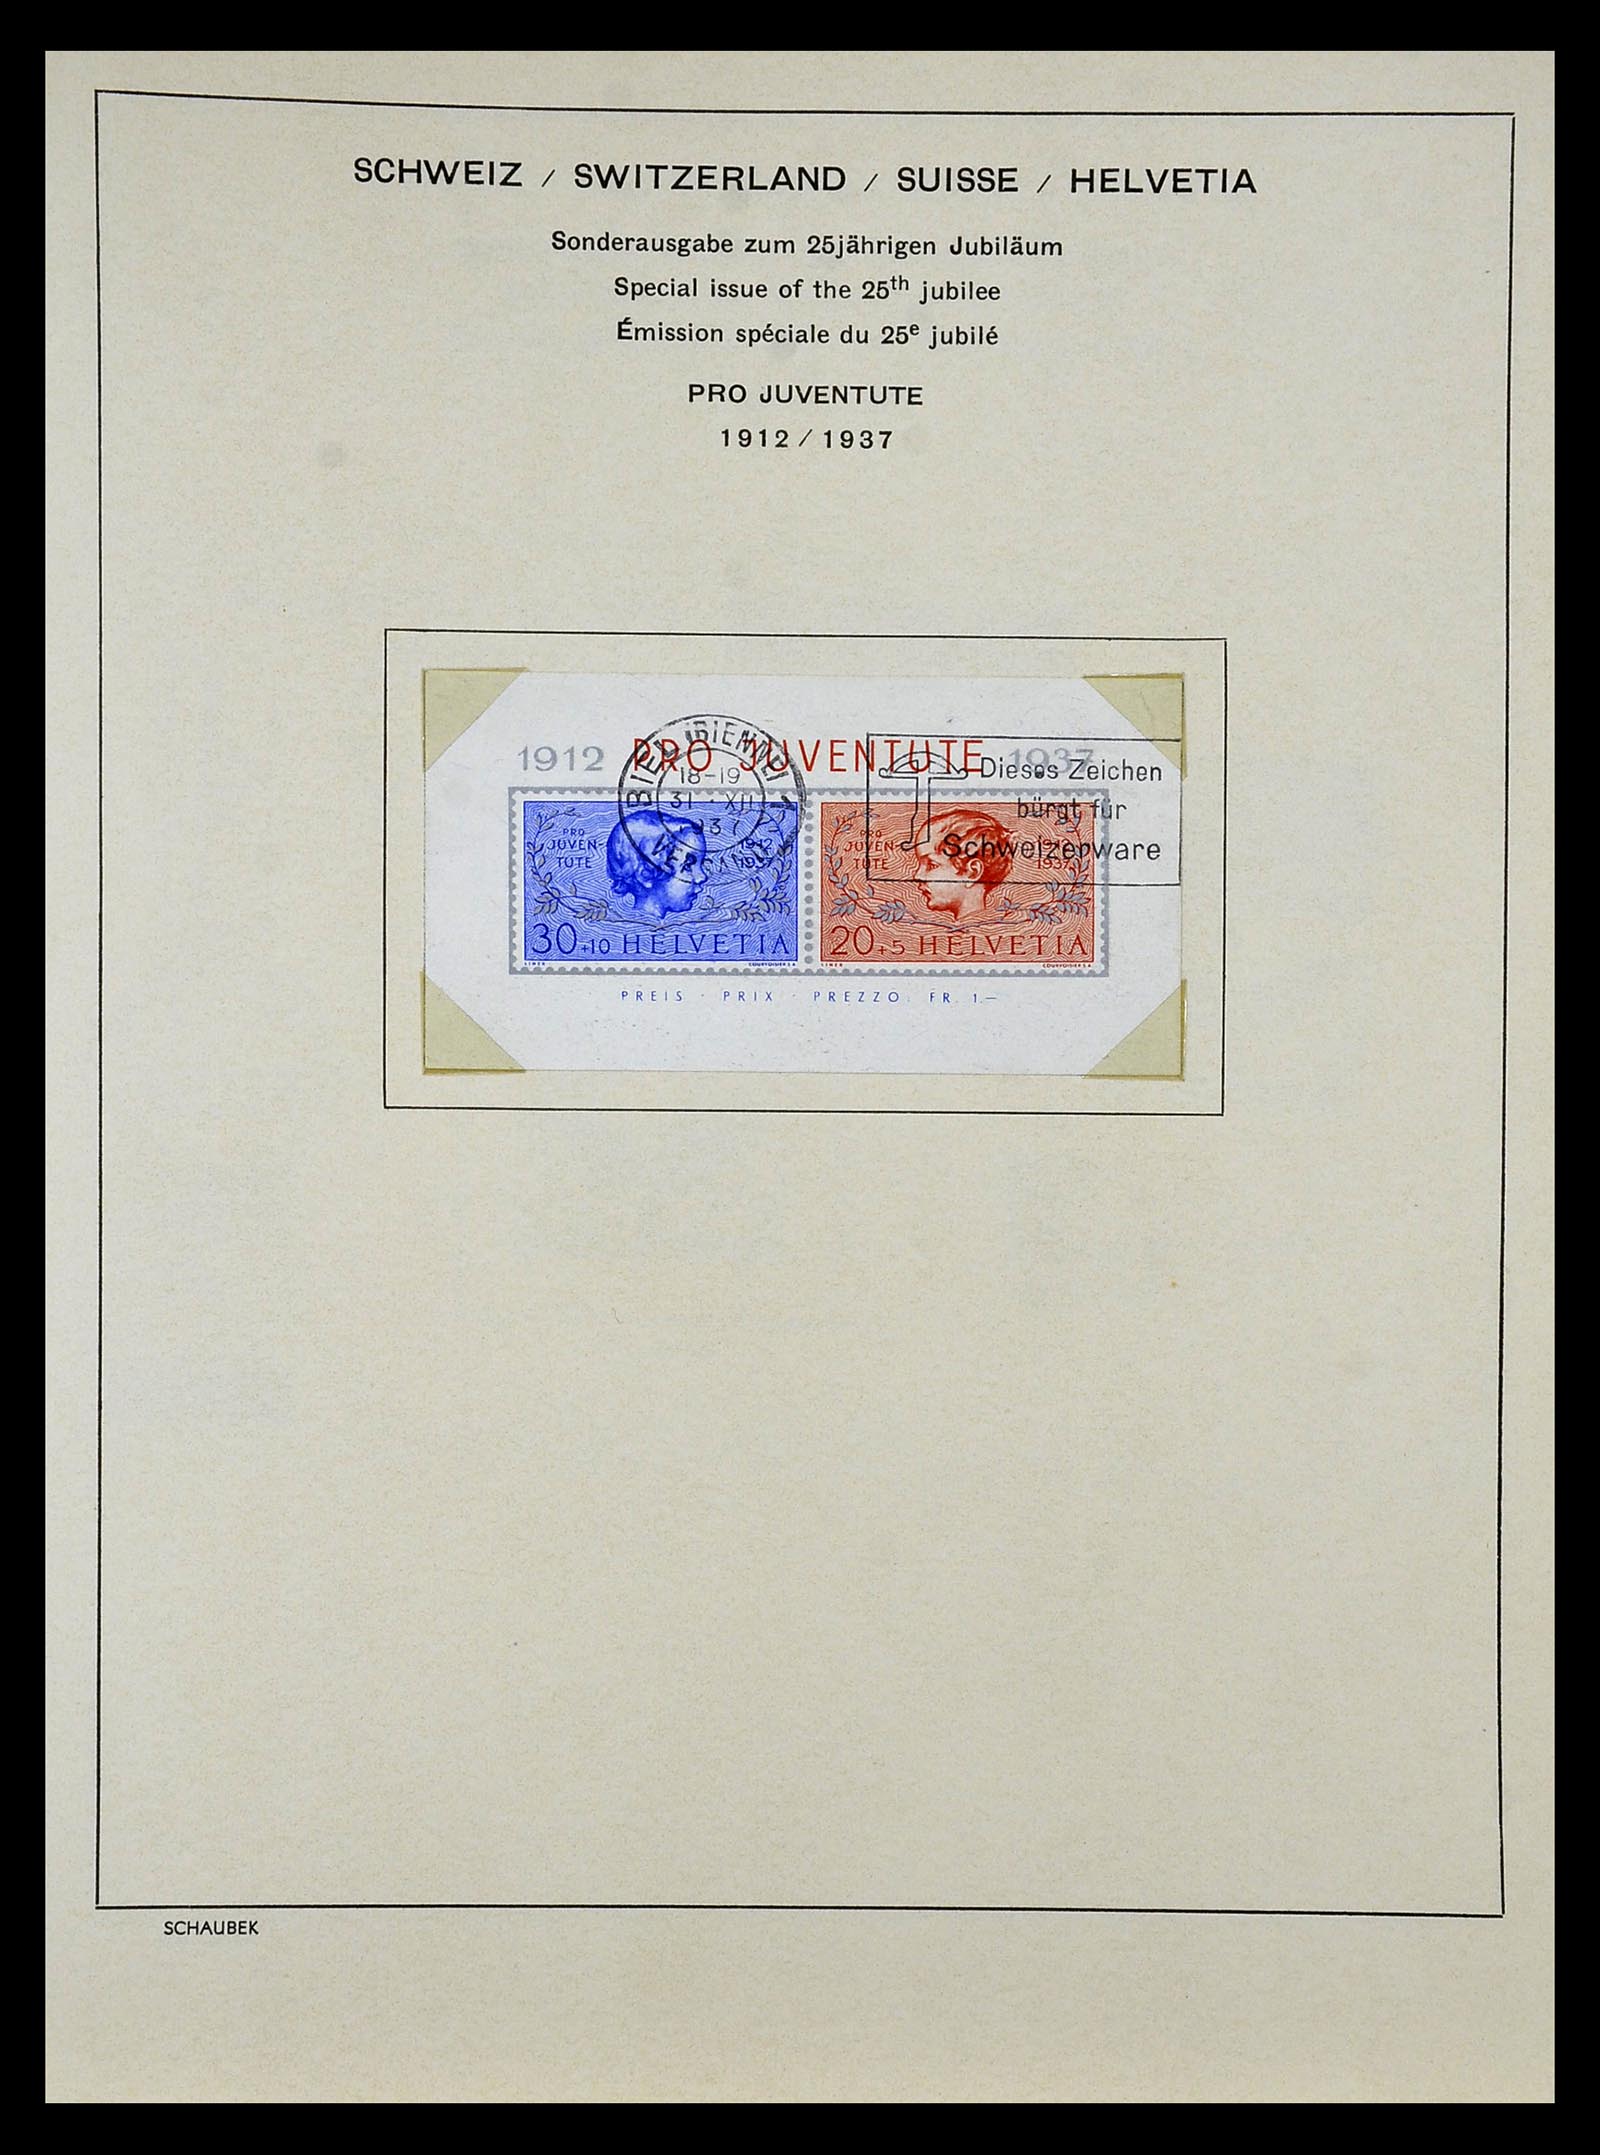 35073 095 - Stamp Collection 35073 Switzerland 1862-1992.